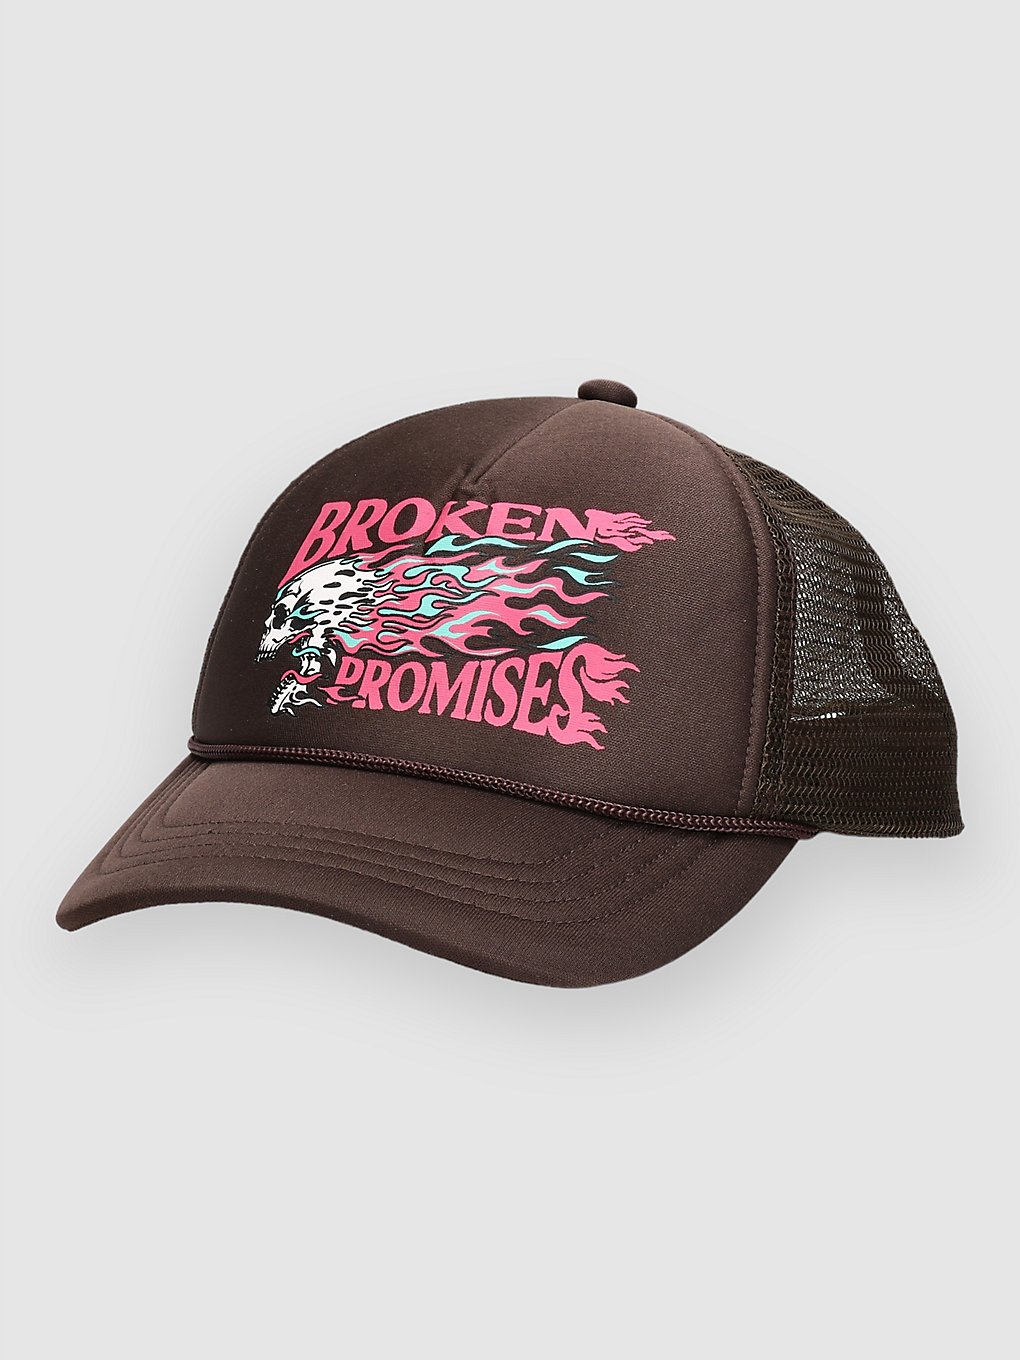 Broken Promises Sound Check Trucker petje bruin